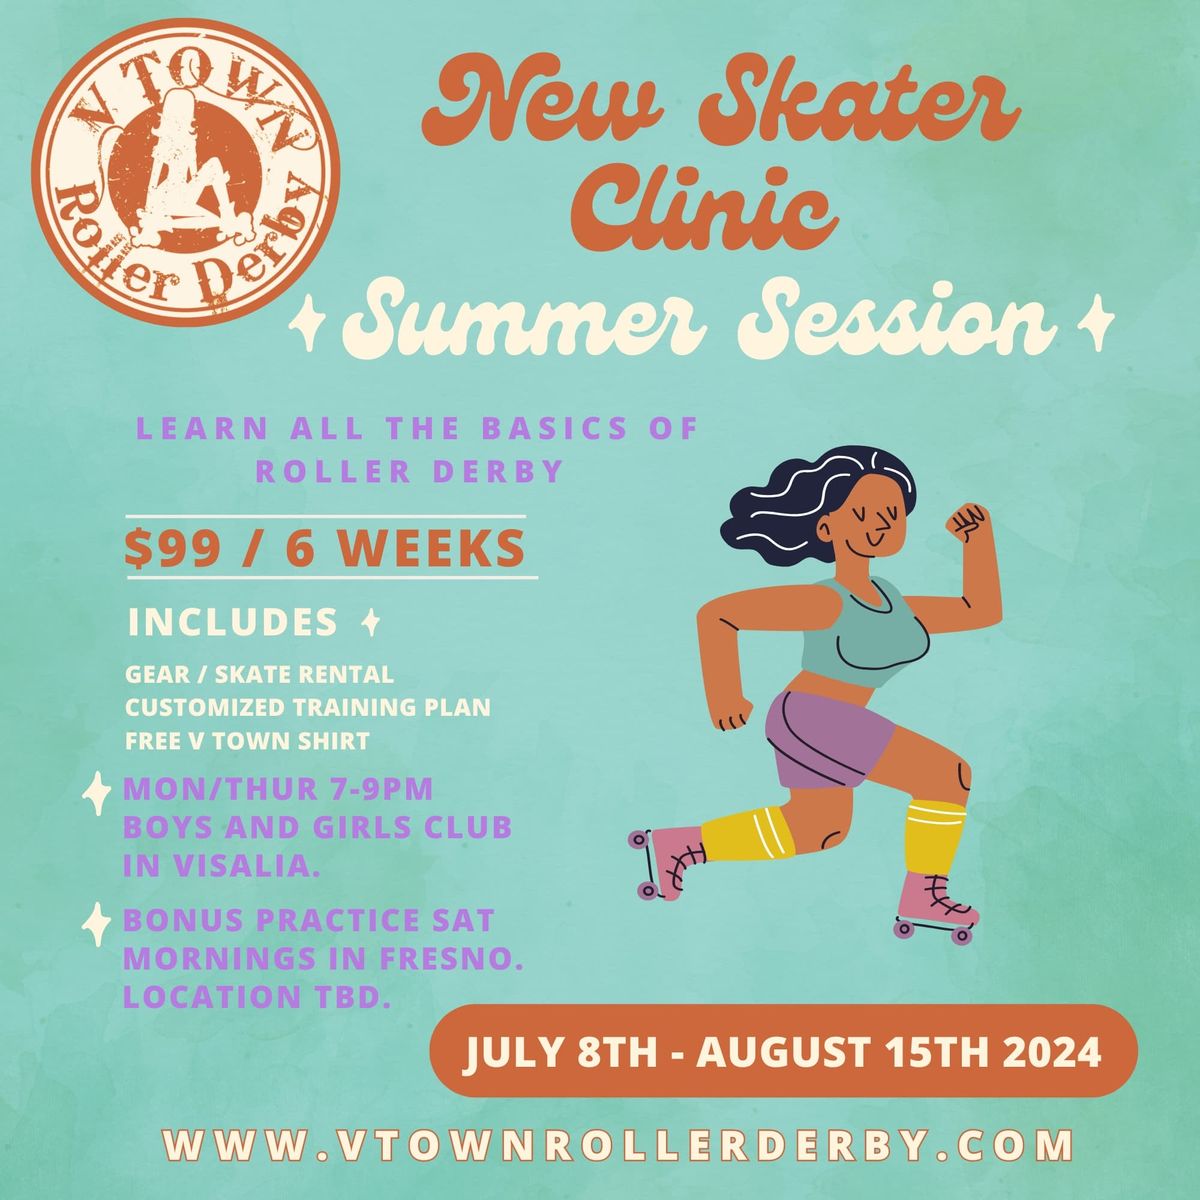 New Skater Clinic - Summer Session 